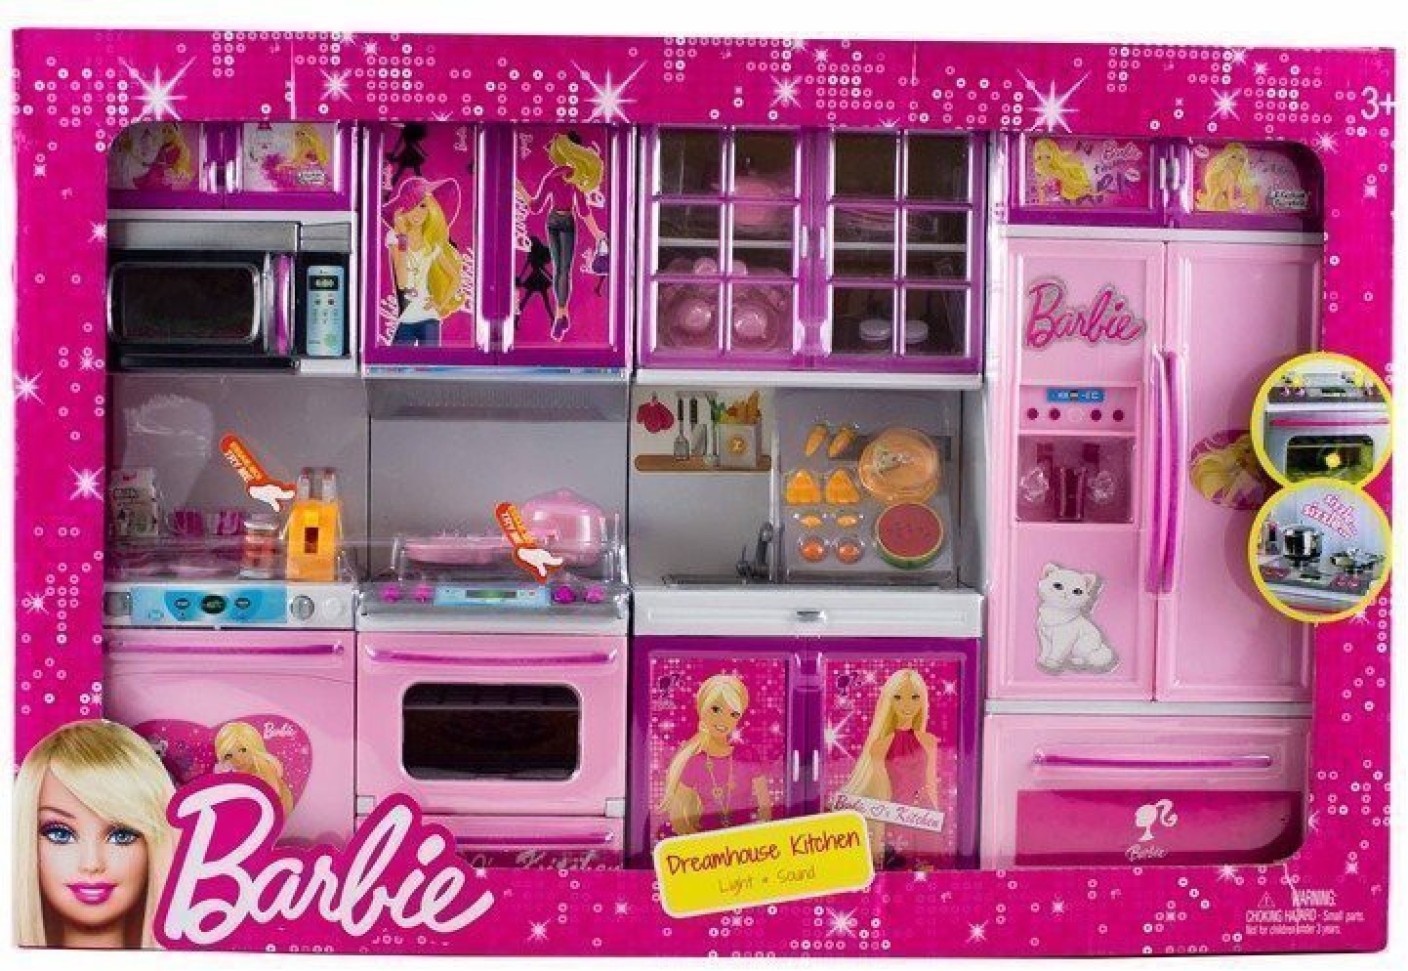 barbie cooking set